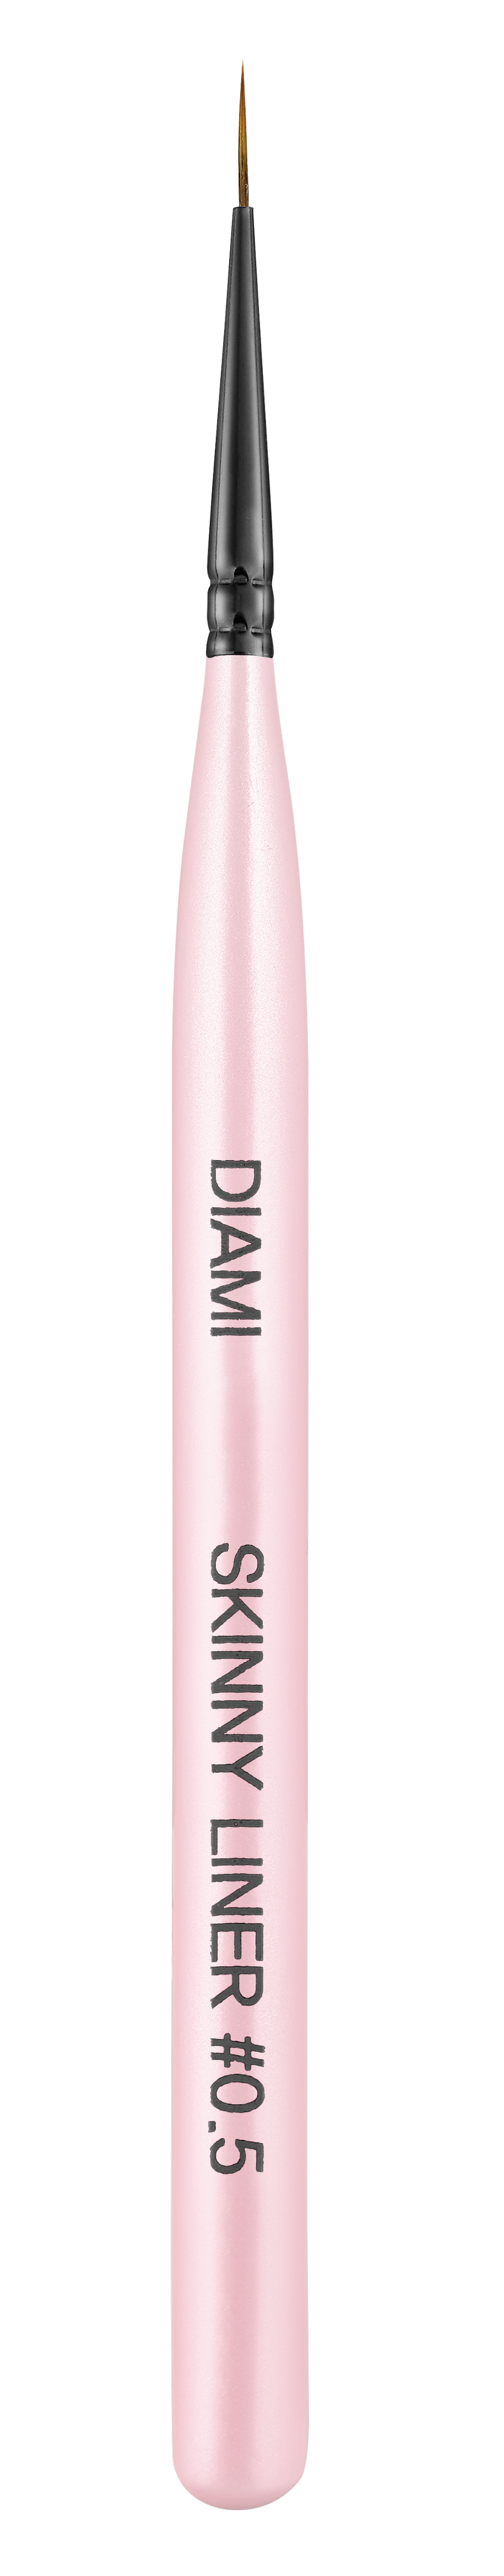 DIAMI 0.5 liner brush #0.5